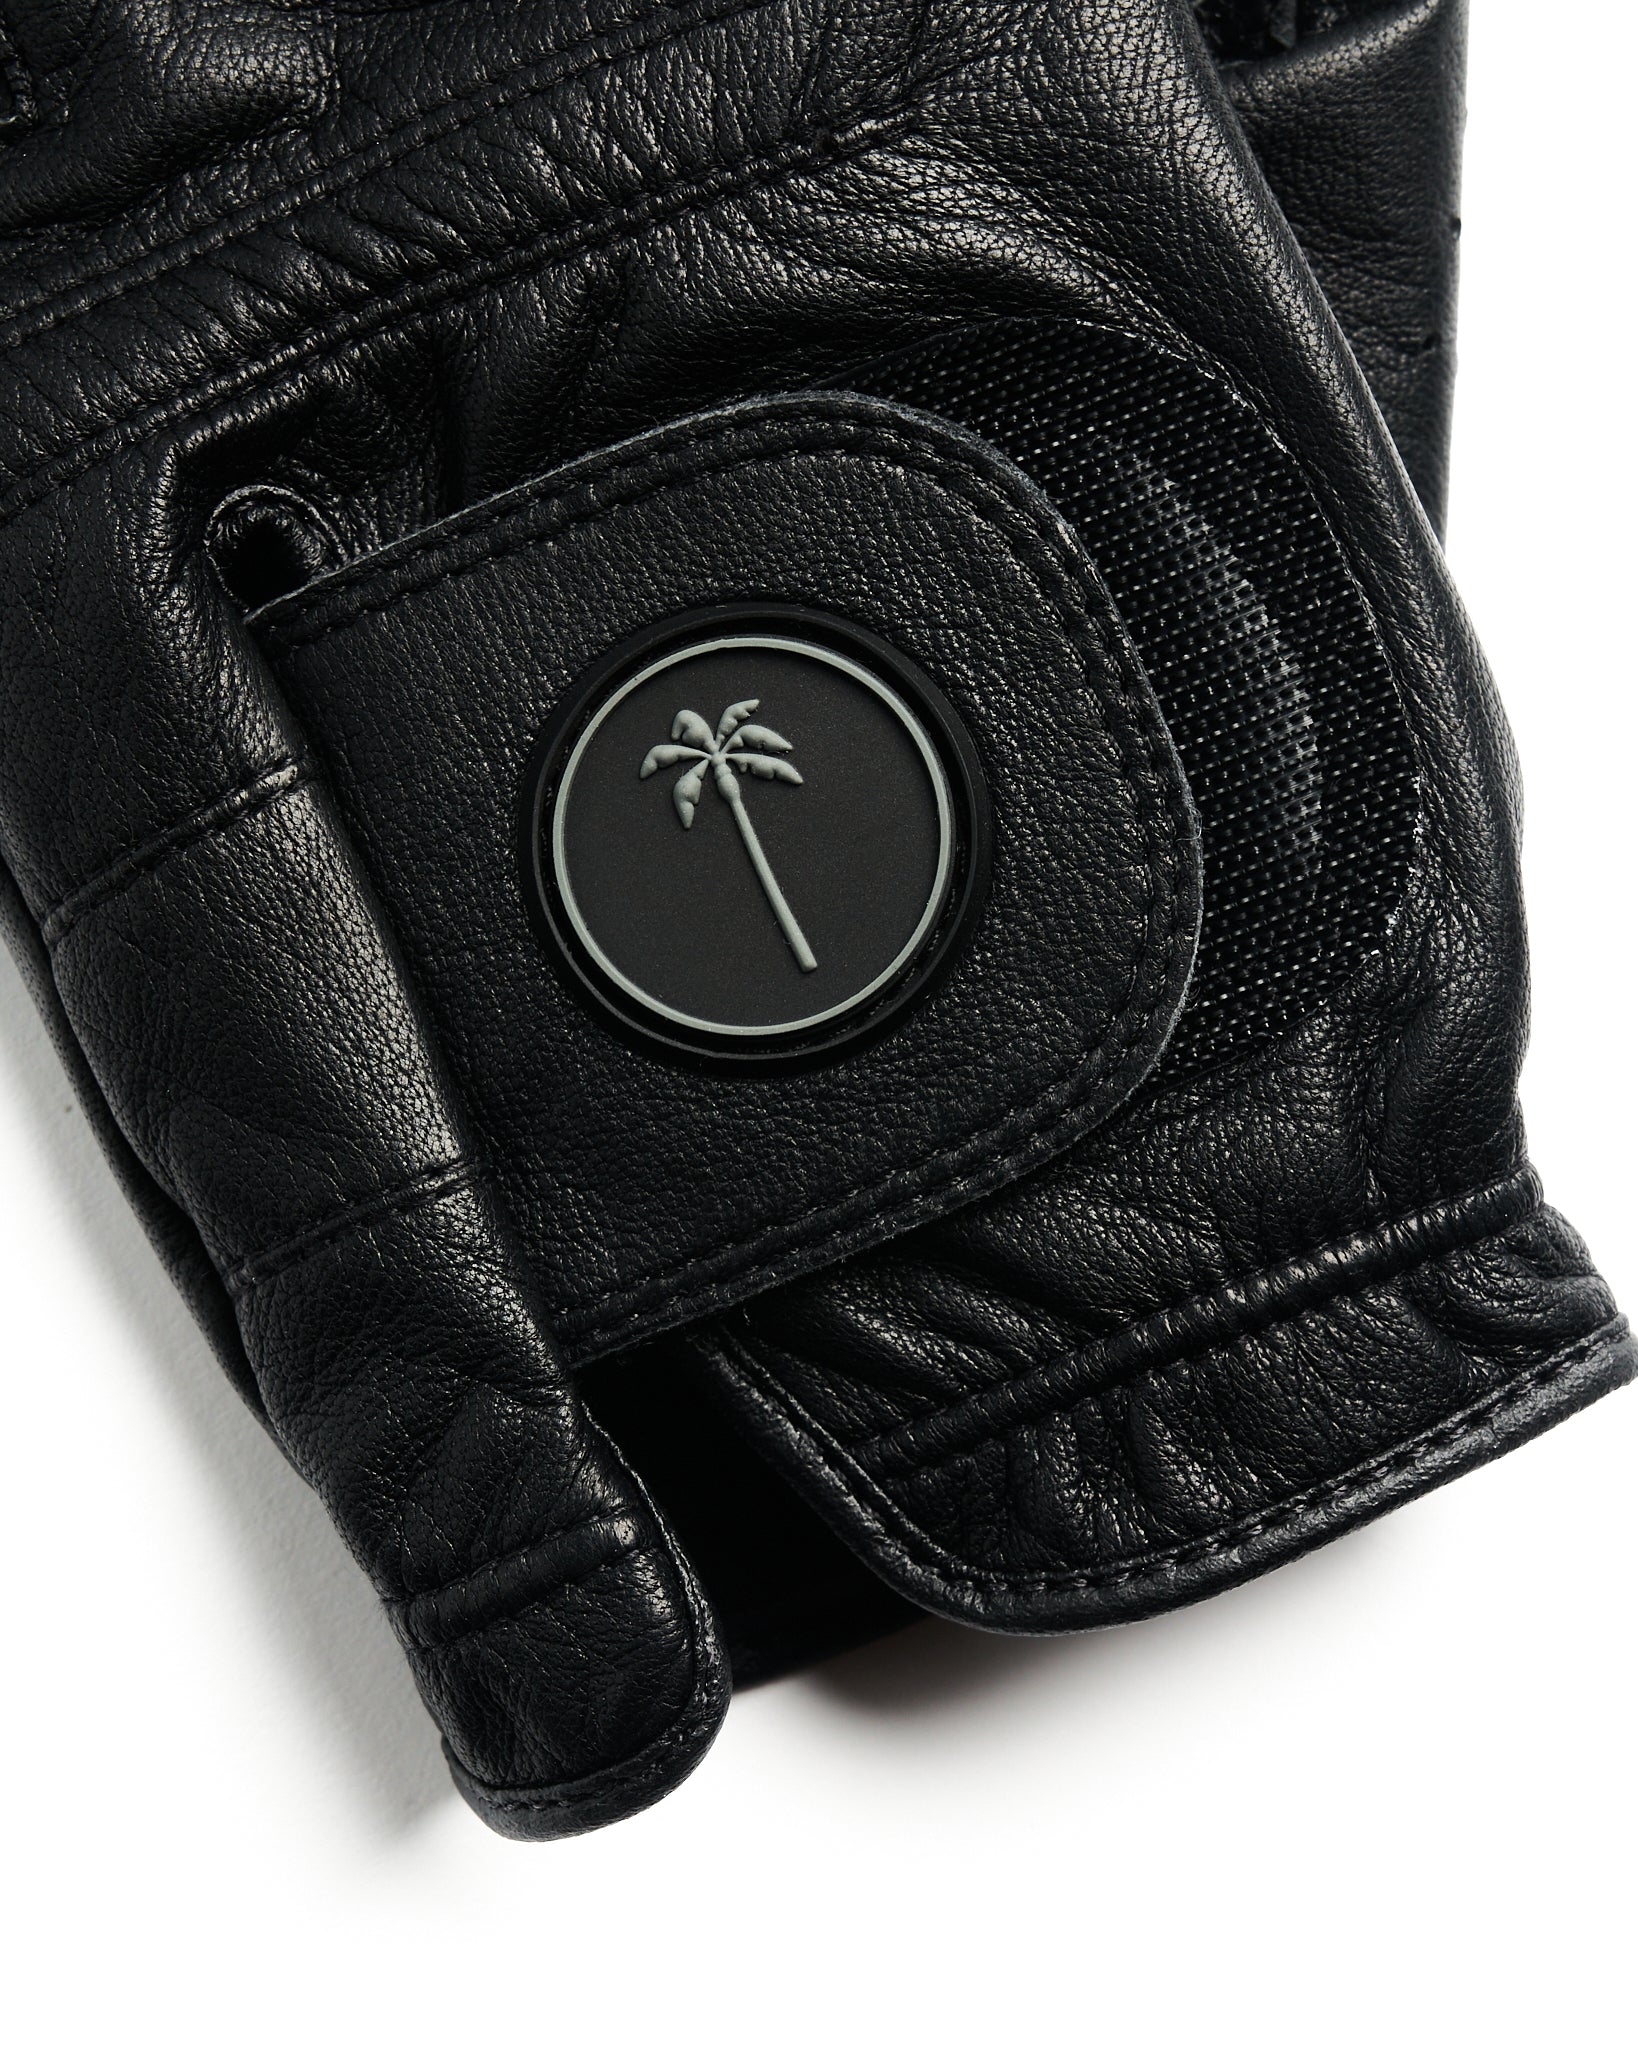 Men's Canvas Glove (Black) - Palm Golf Co.